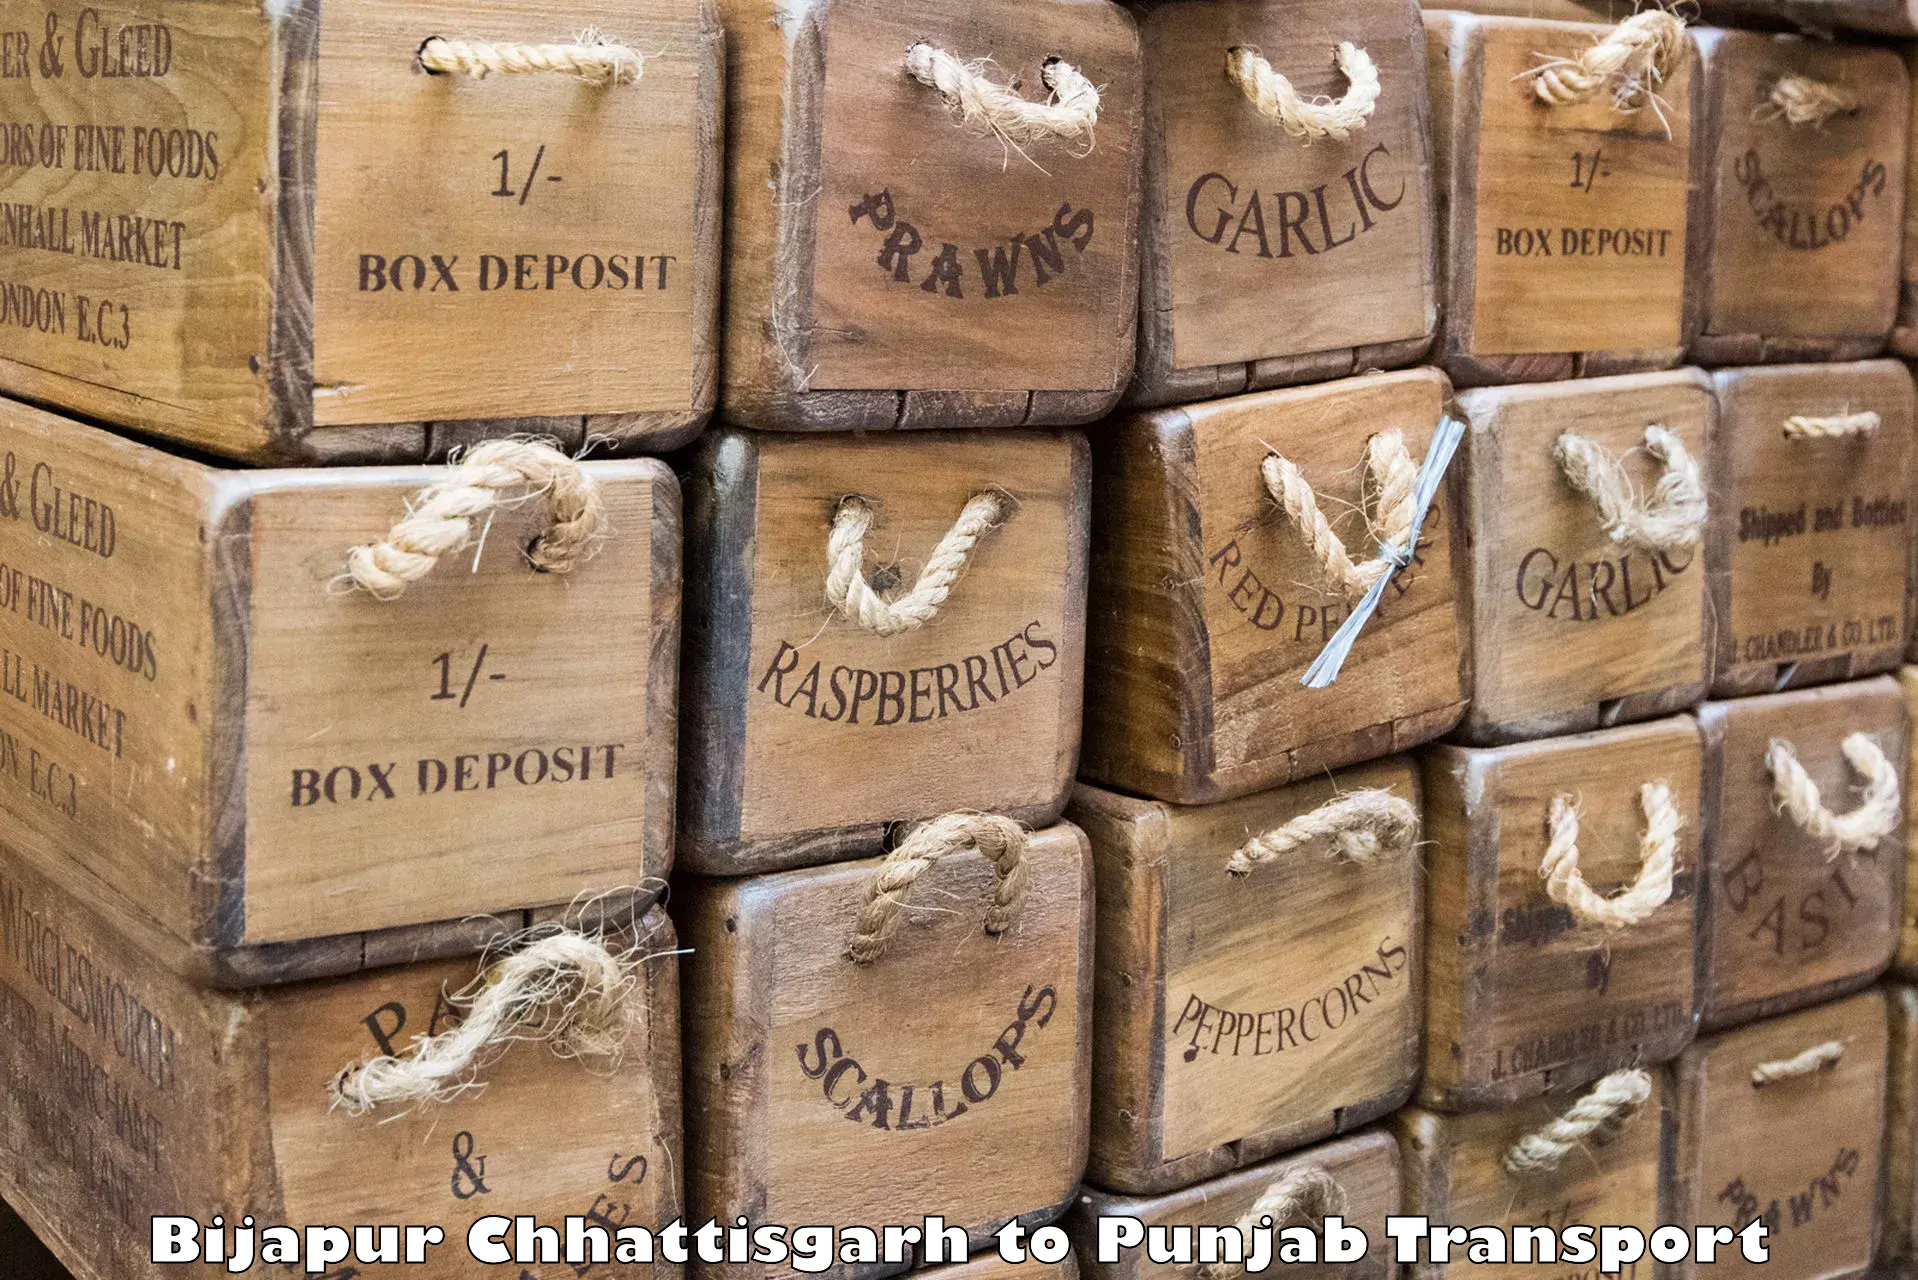 Lorry transport service Bijapur Chhattisgarh to Amritsar